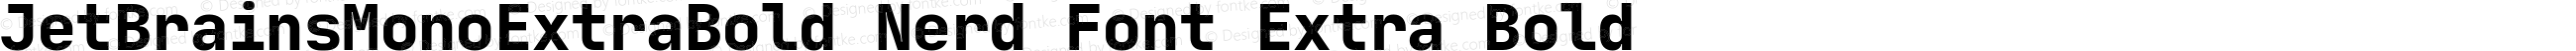 JetBrainsMonoExtraBold Nerd Font Extra Bold